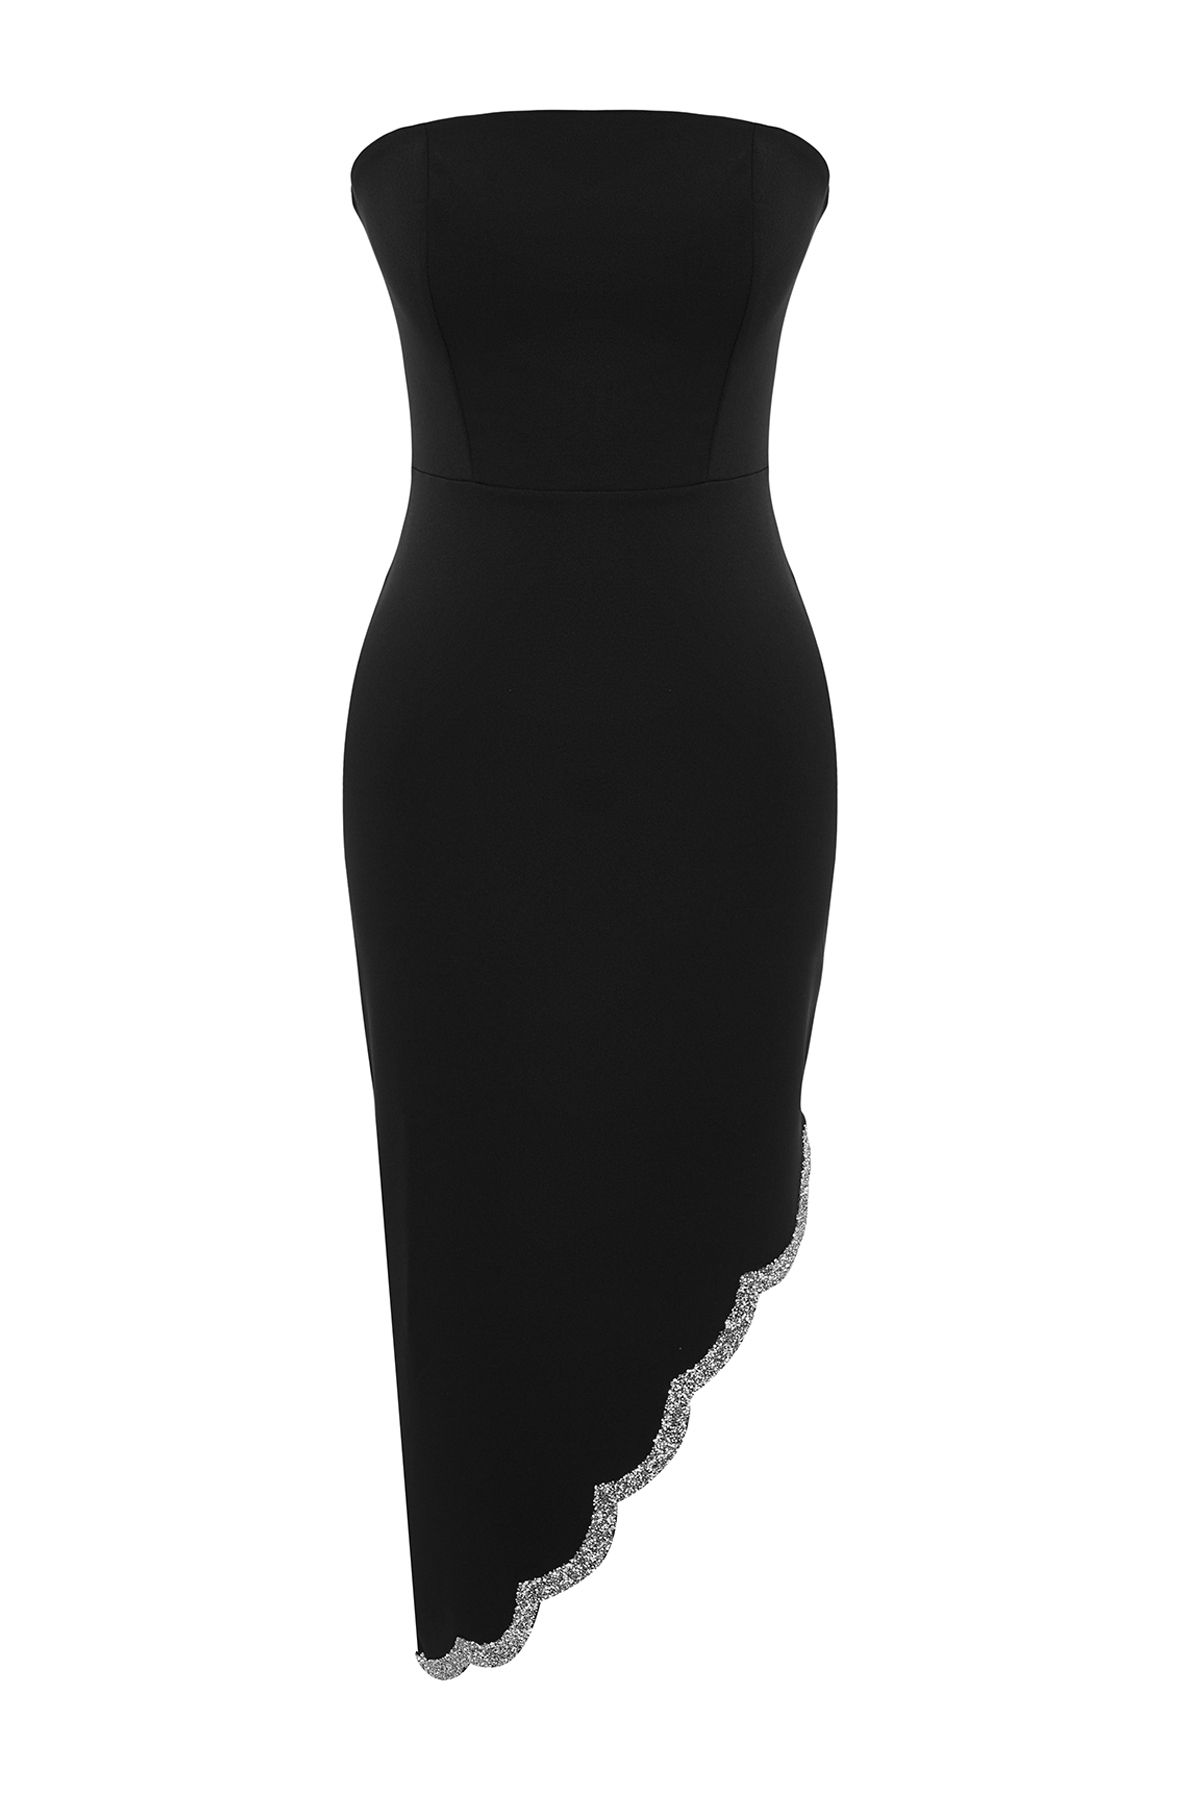 Trendyol Collection Elegant Form-fitting Evening Dress with Black Stone  Accessories TPRSS24EL00012 - Trendyol